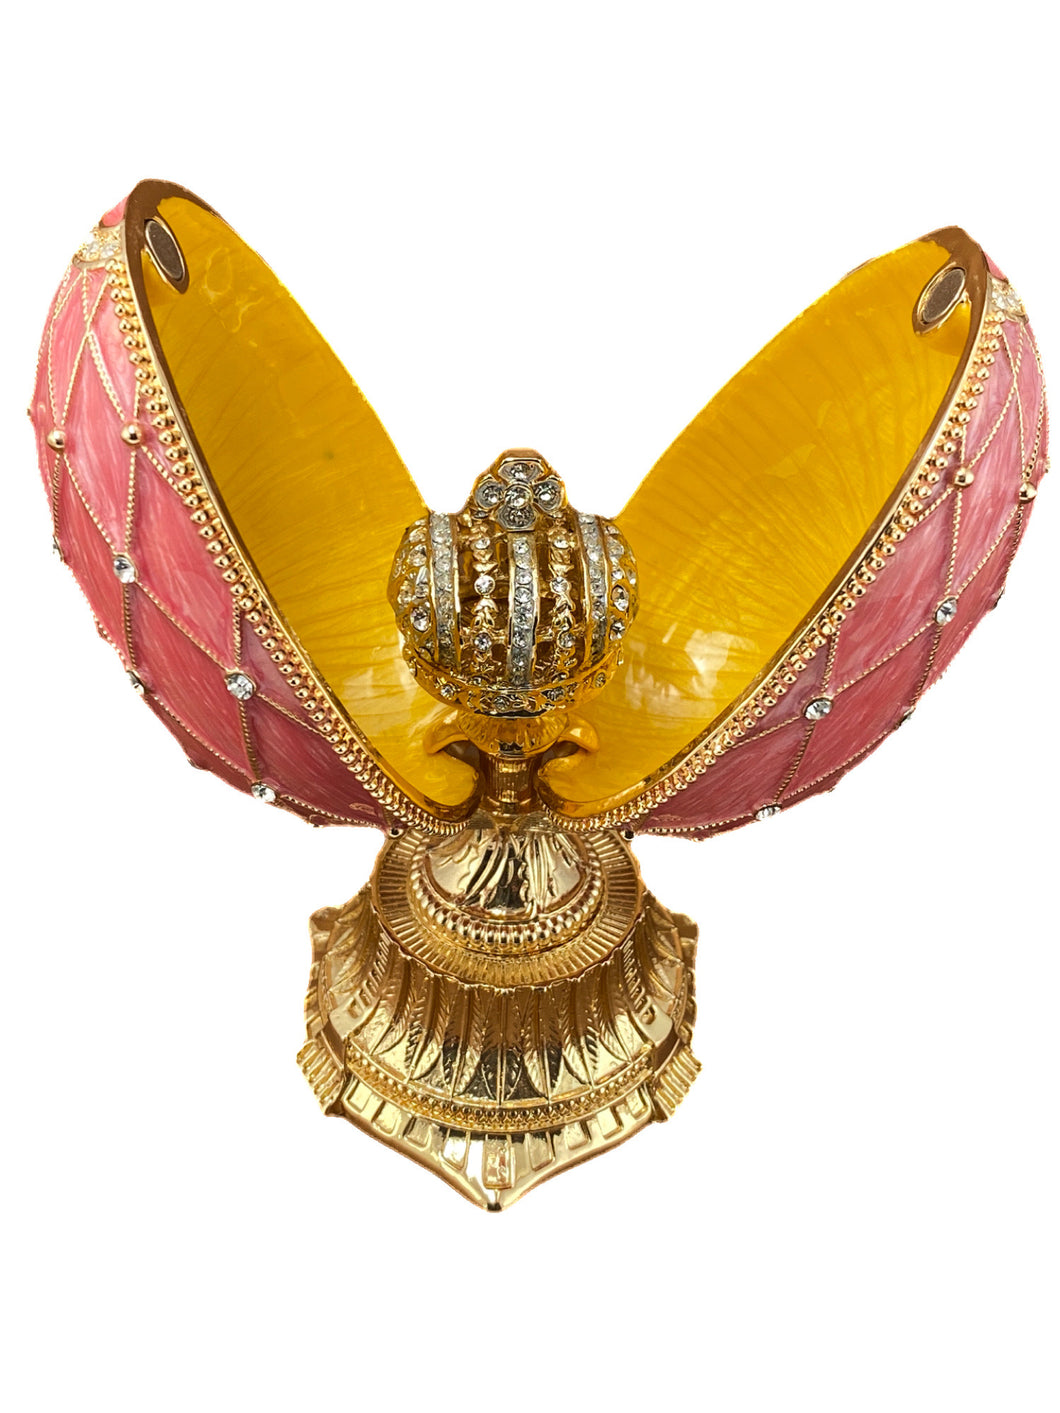 Huevo de Faberge. Corona Imperial